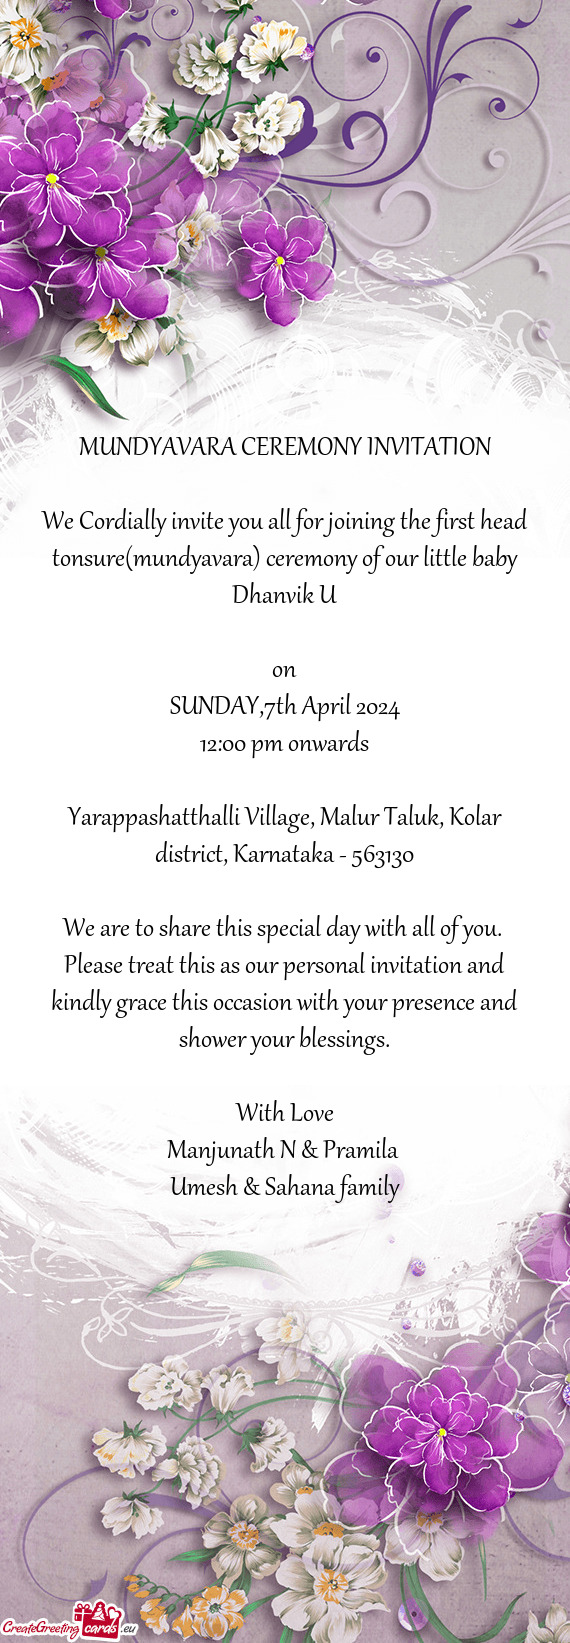 Yarappashatthalli Village, Malur Taluk, Kolar district, Karnataka - 563130